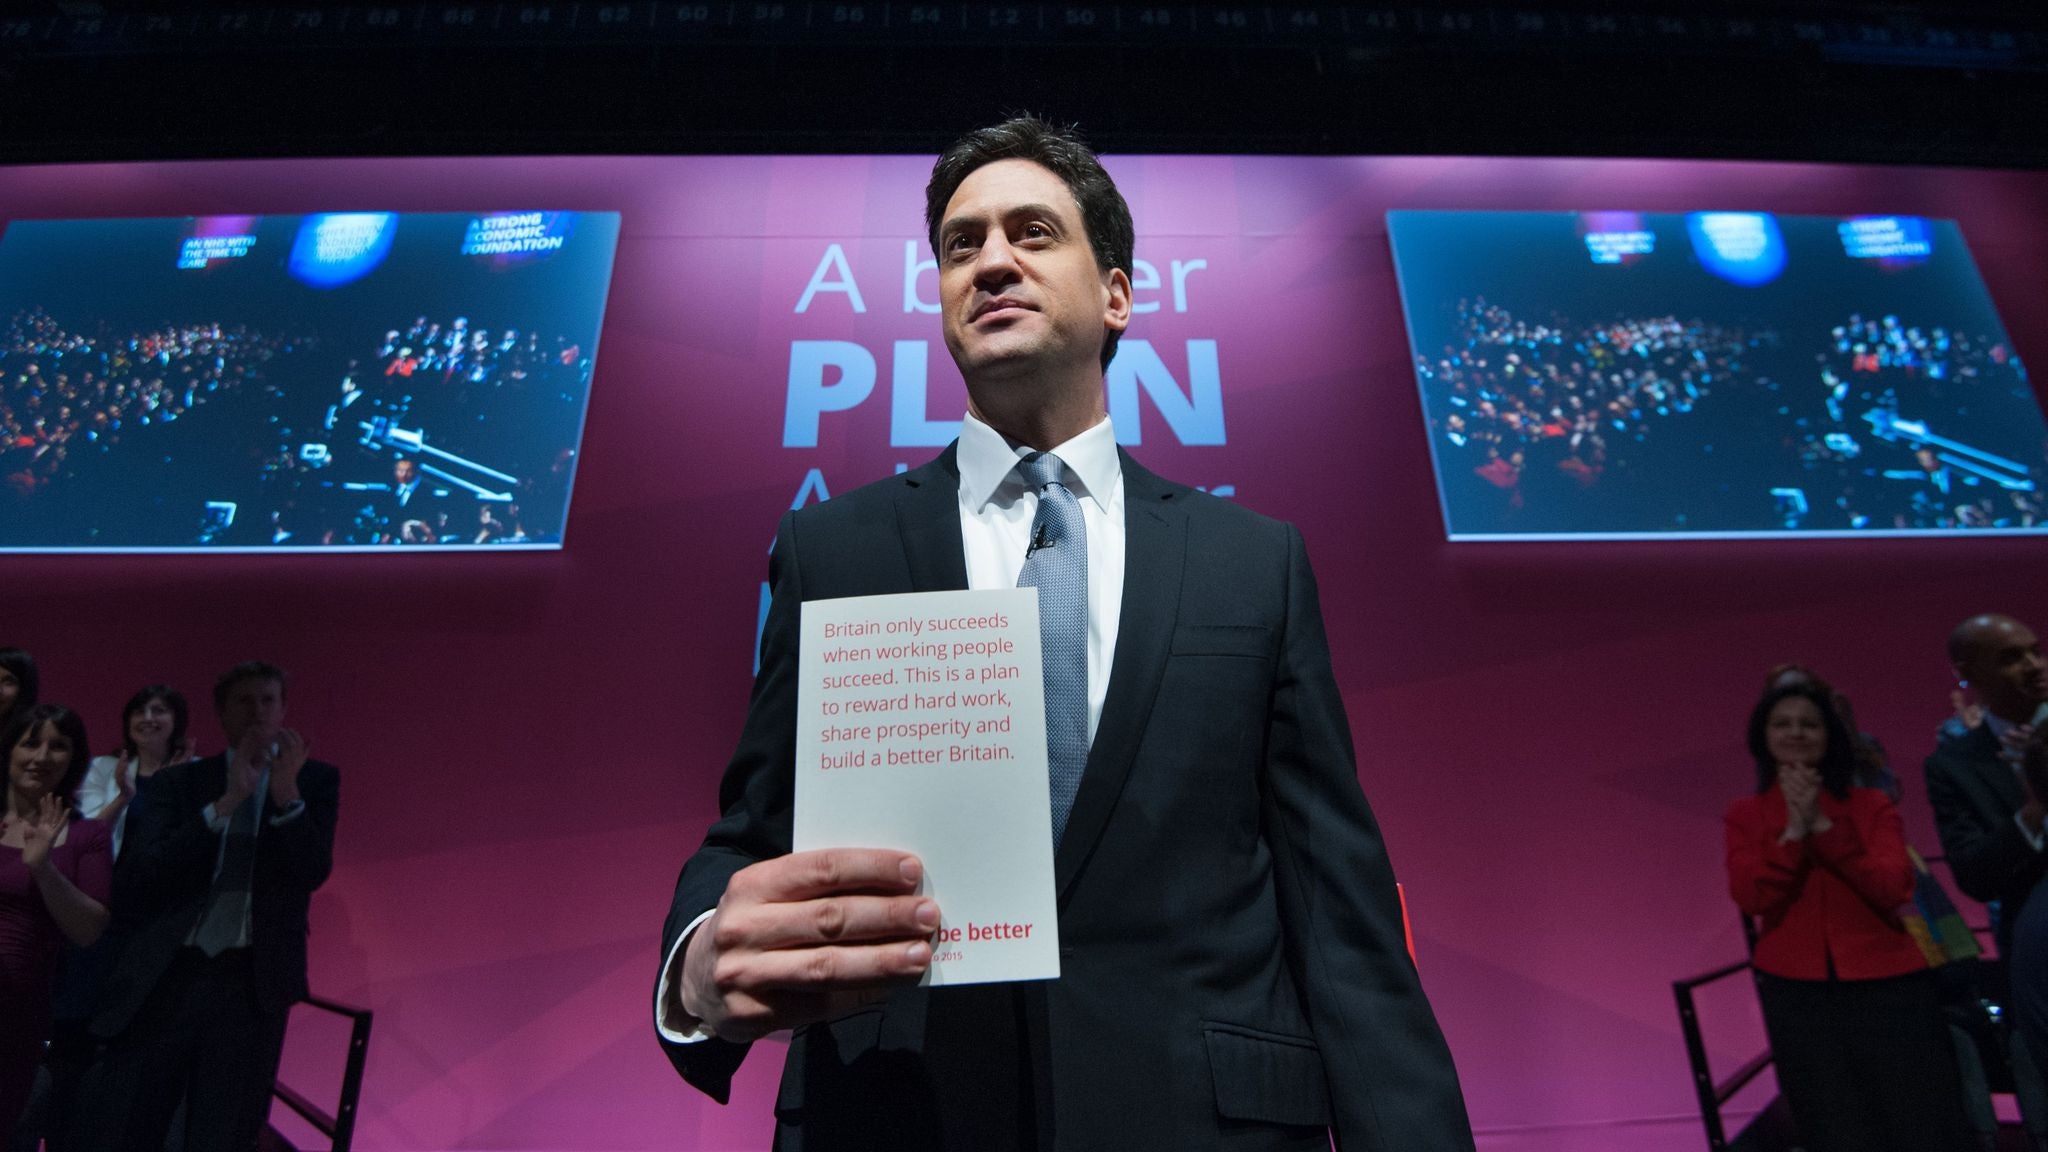 Ed Miliband poses with Labour's 2015 manifesto